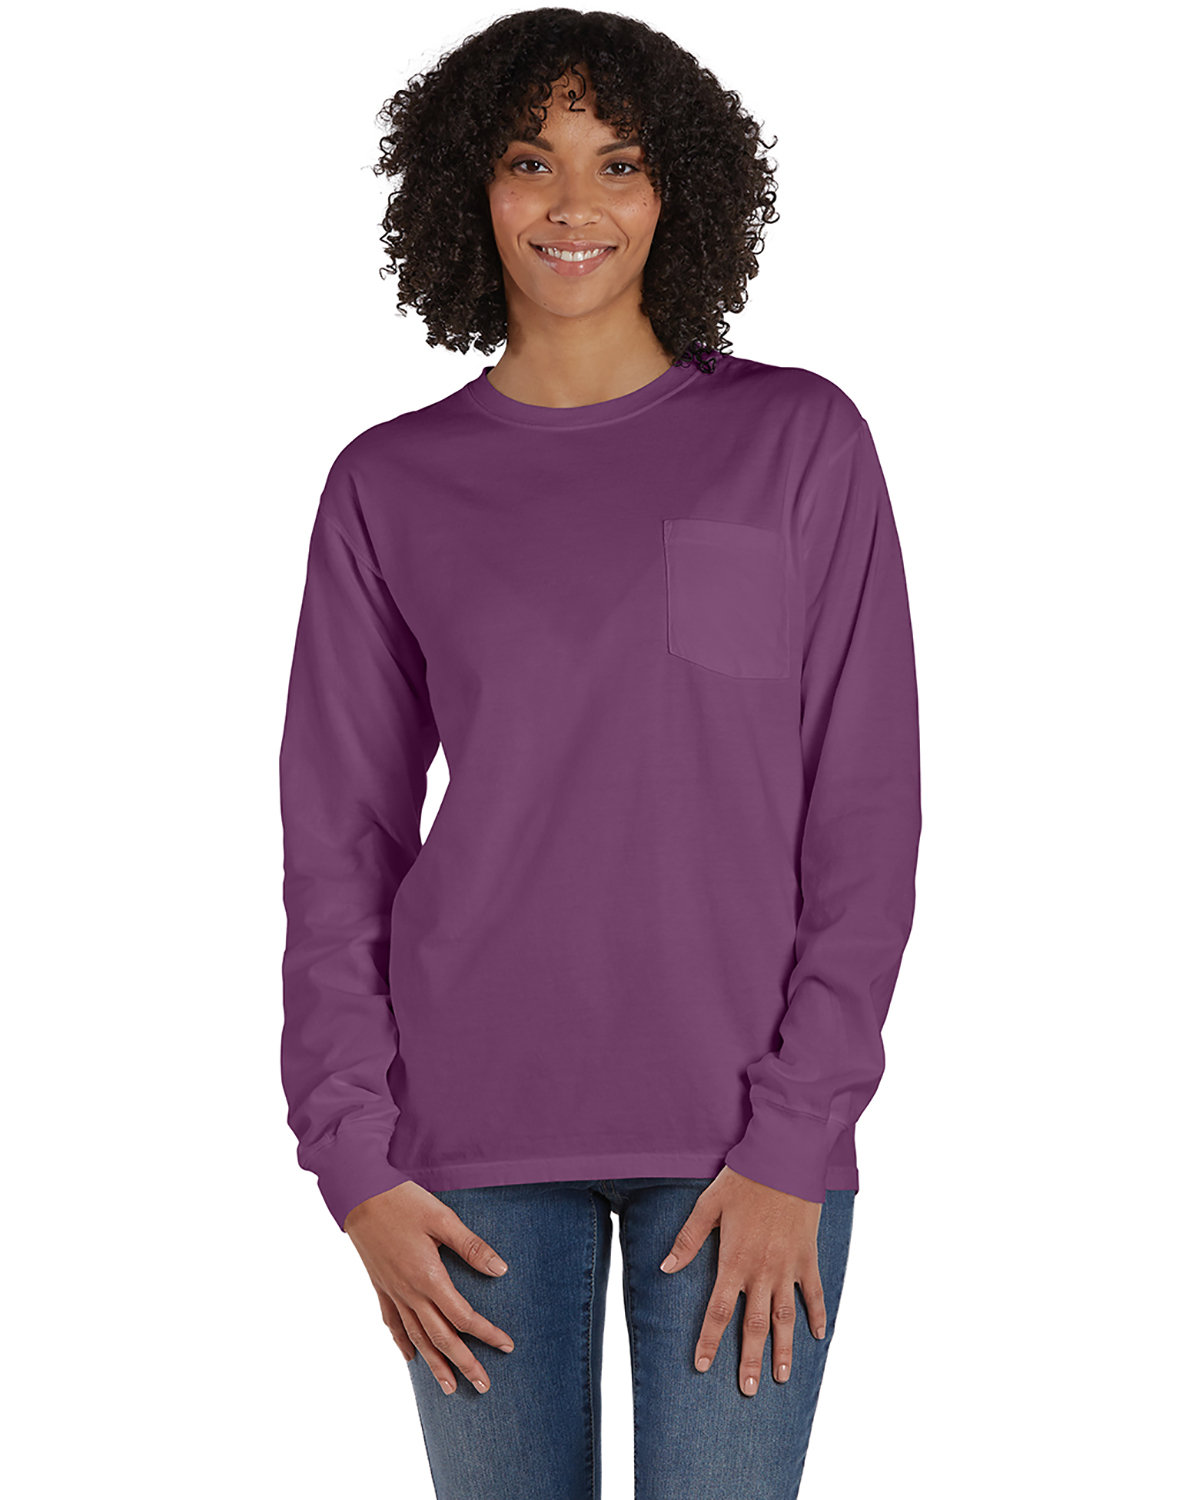 ComfortWash by Hanes Unisex Garment-Dyed Long-Sleeve T-Shirt with Pocket PURP PLUM RAISIN 